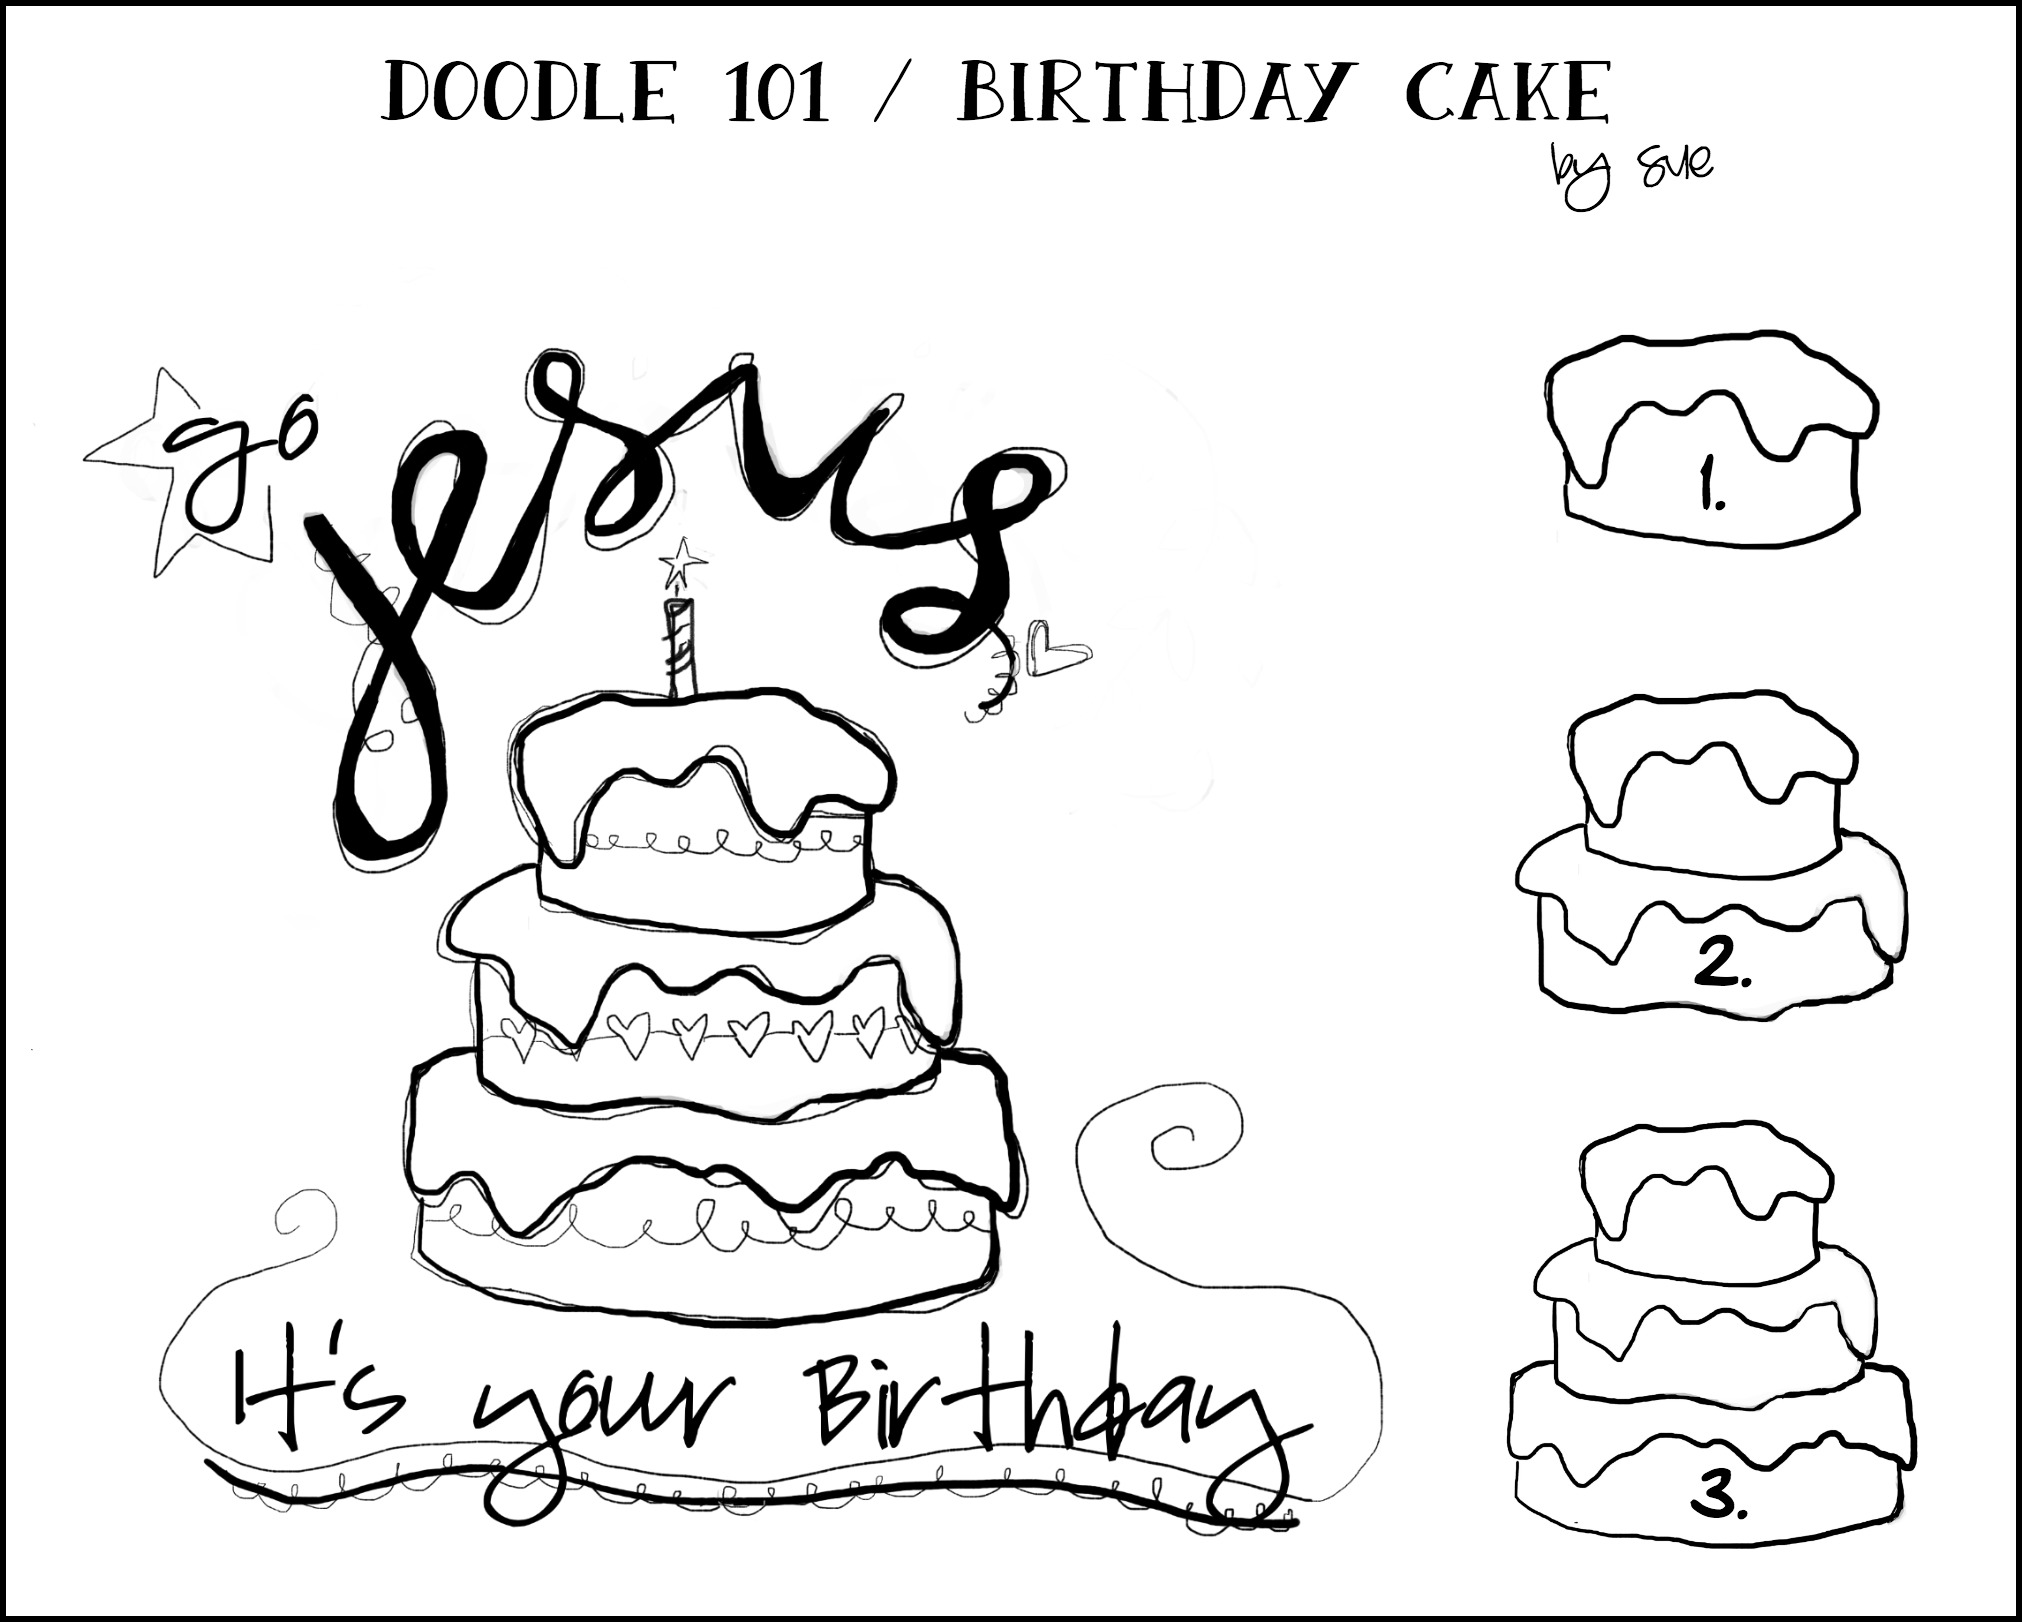 Doodle101:birthdaycake:SueCarroll